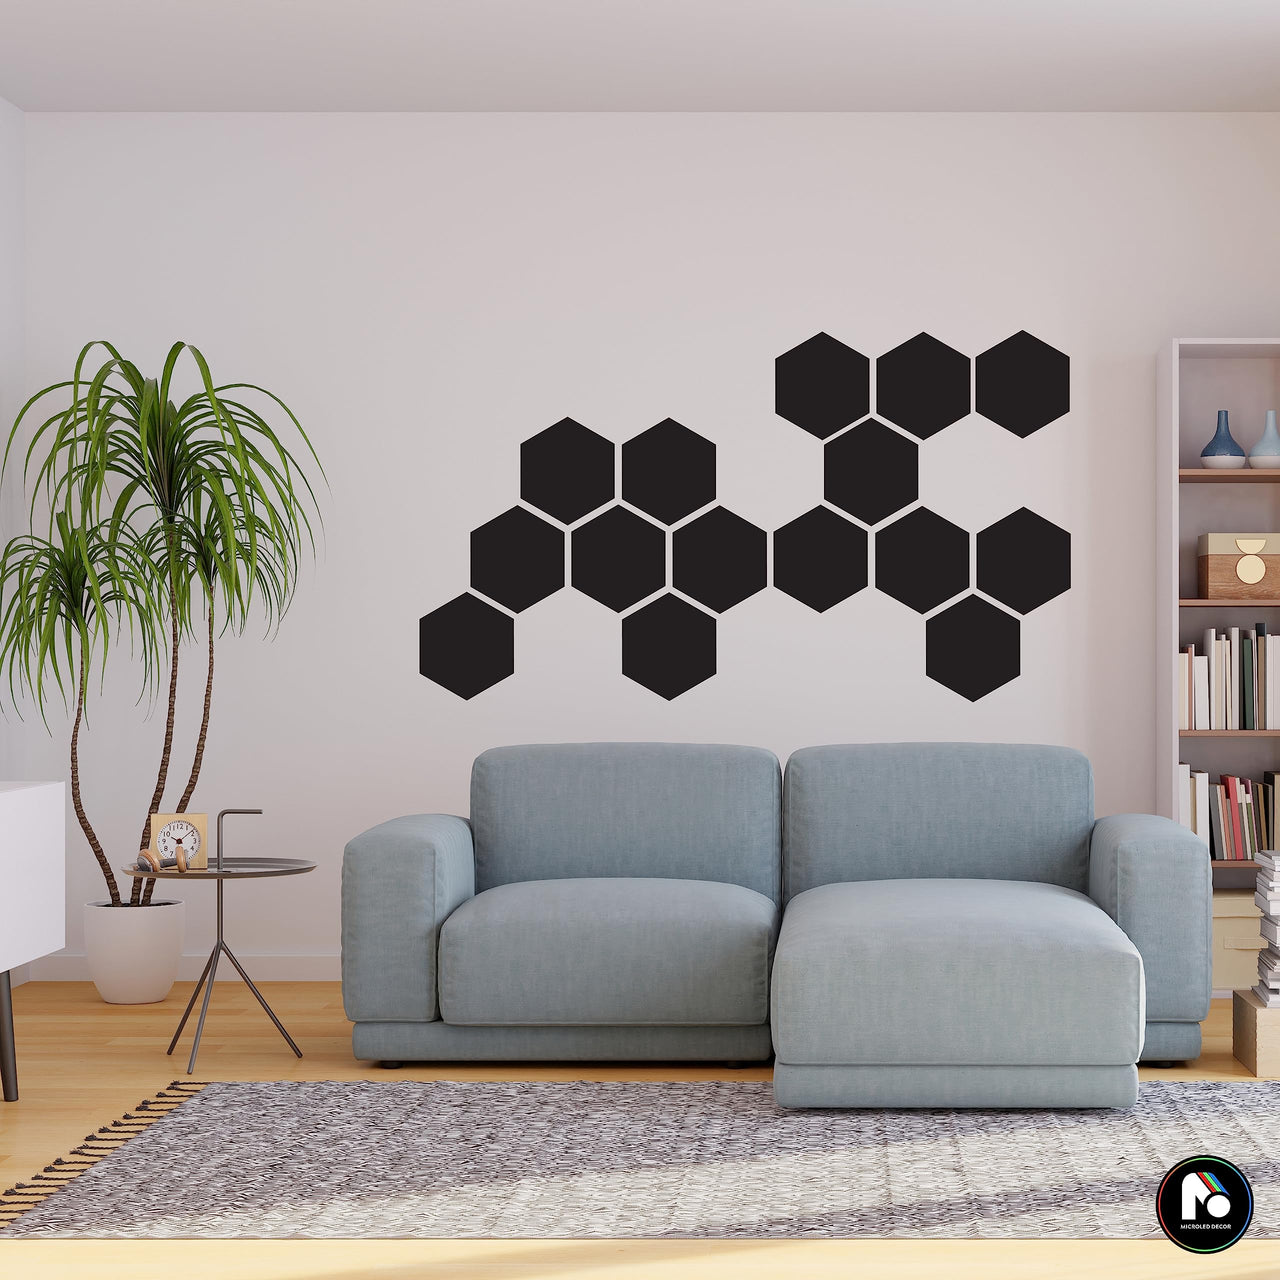 Honeycomb Decorative Wall Art - Pack of 15 Hexagon Shapes - Modern Geometric Design - Geometric Wall Art Decor - Easy Installation - Black & White - Home Wall Decor Art